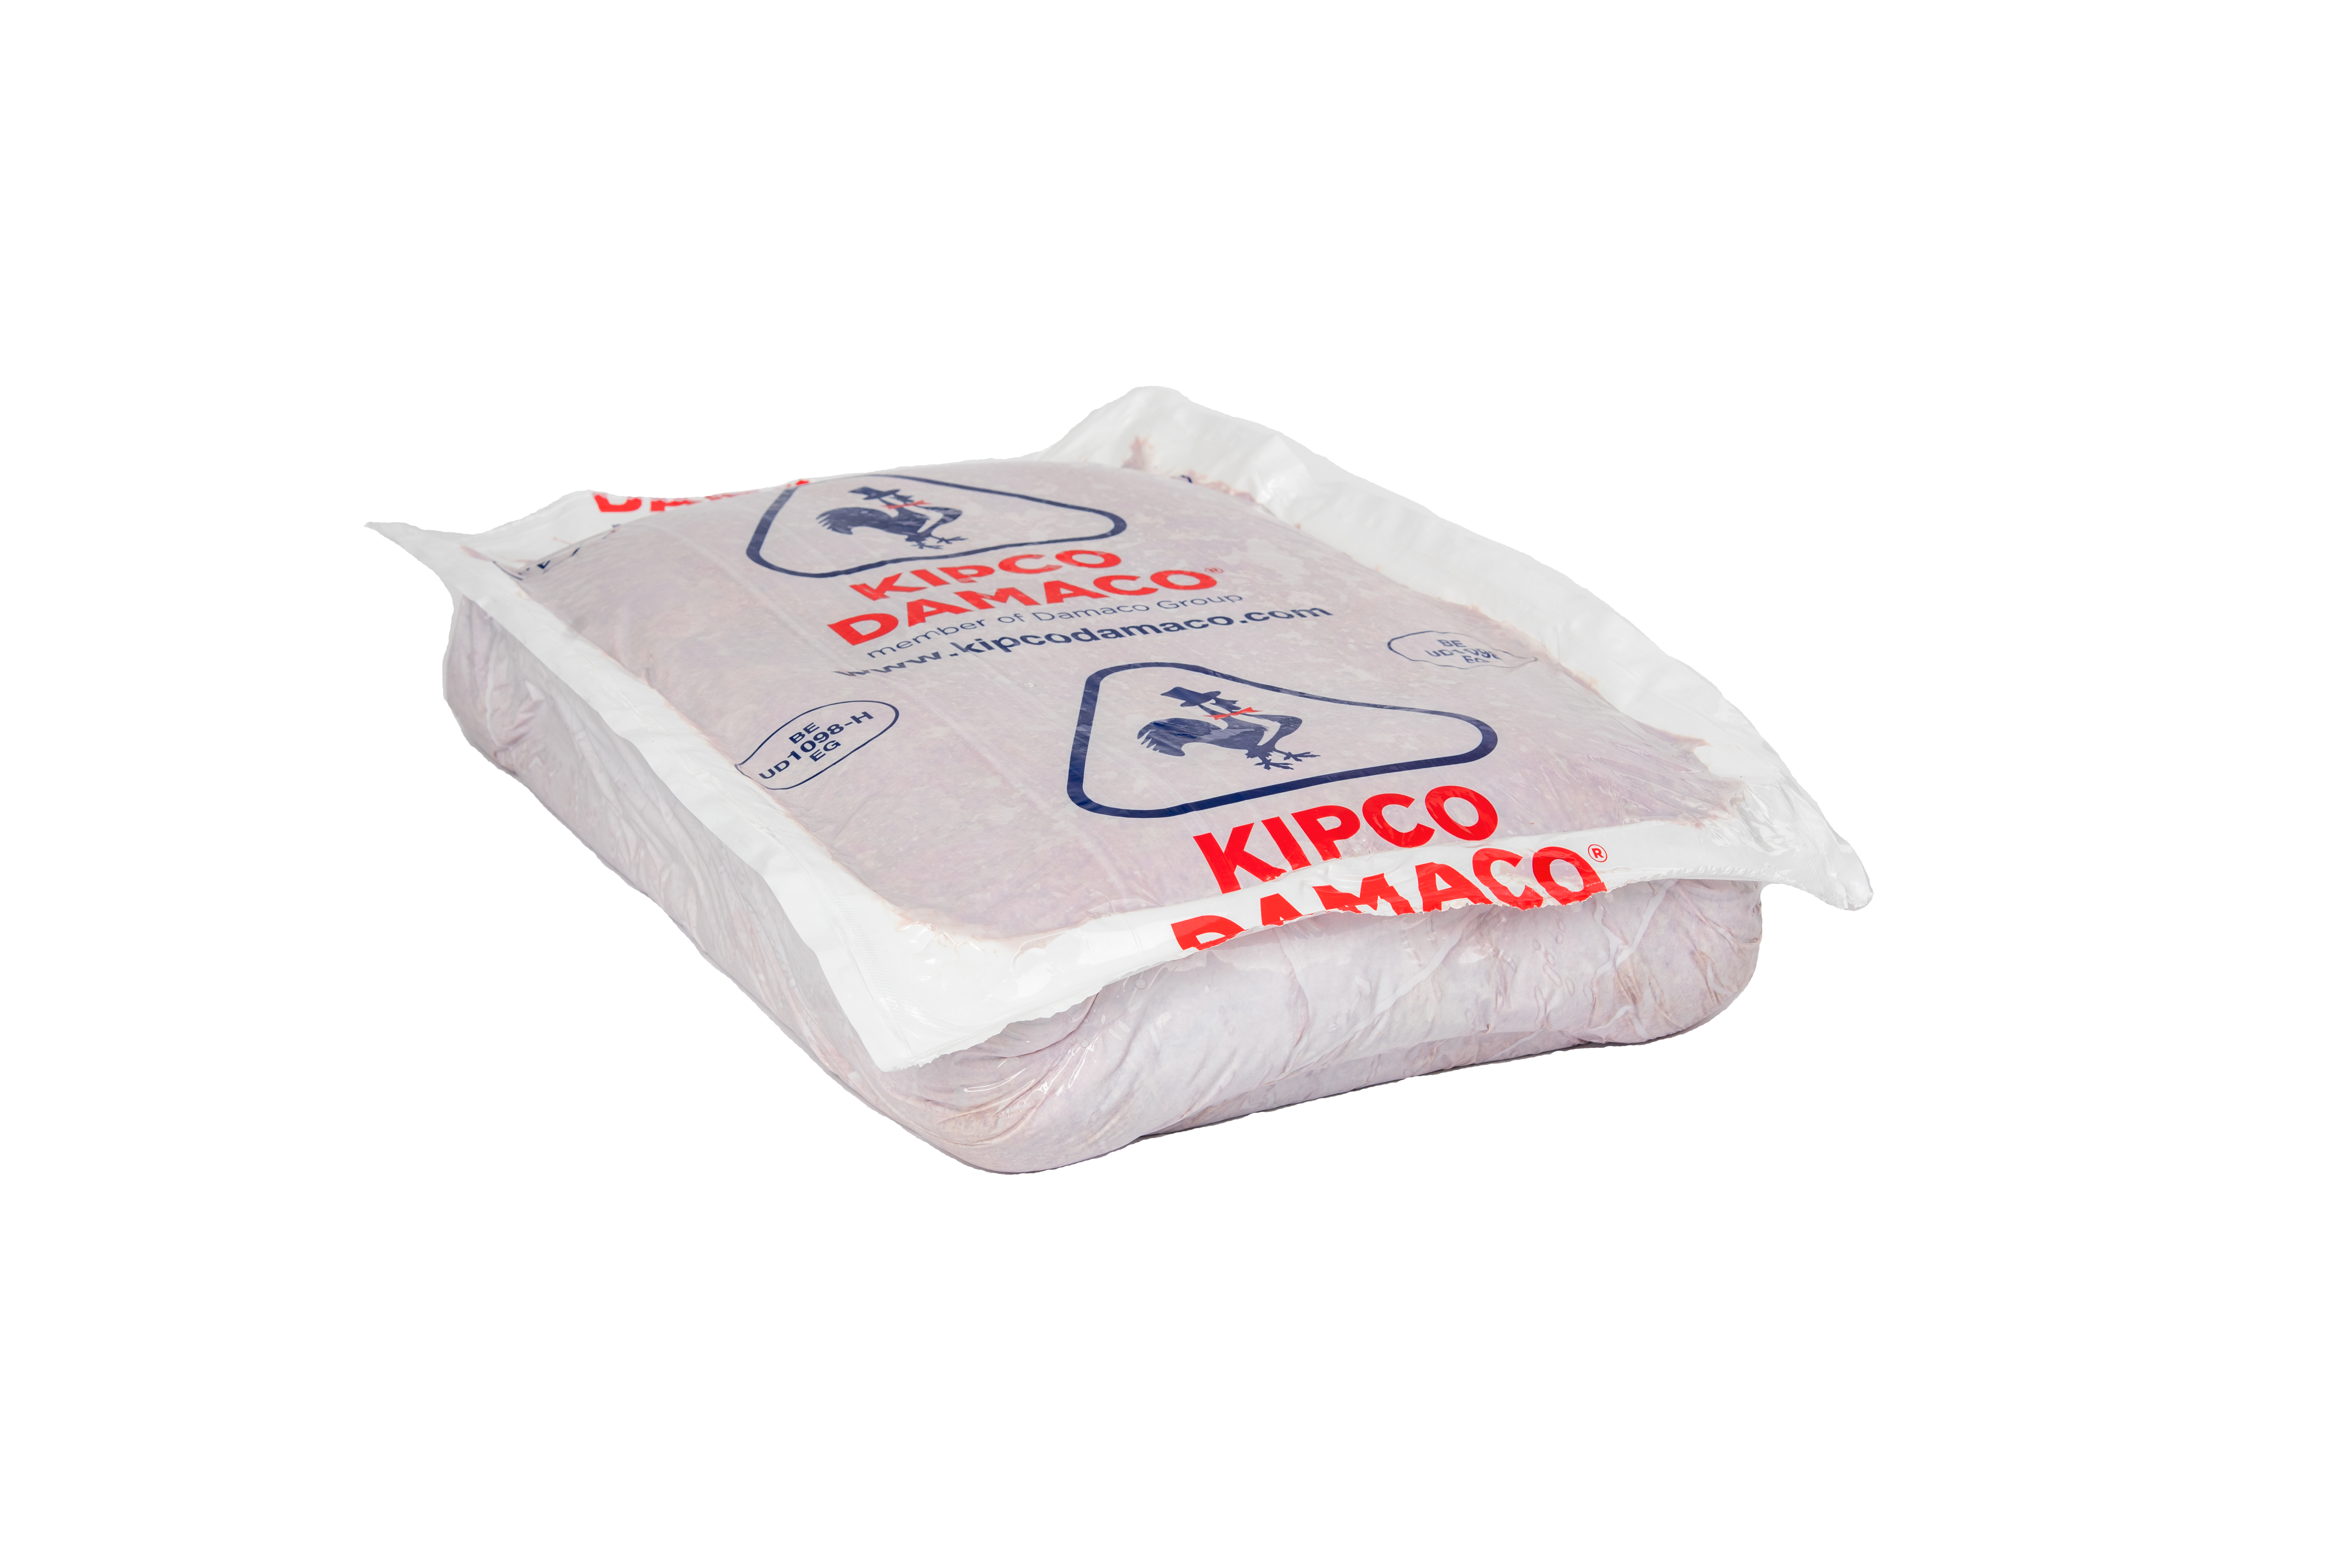 20kg Multivacs Kipco-Damaco packaging